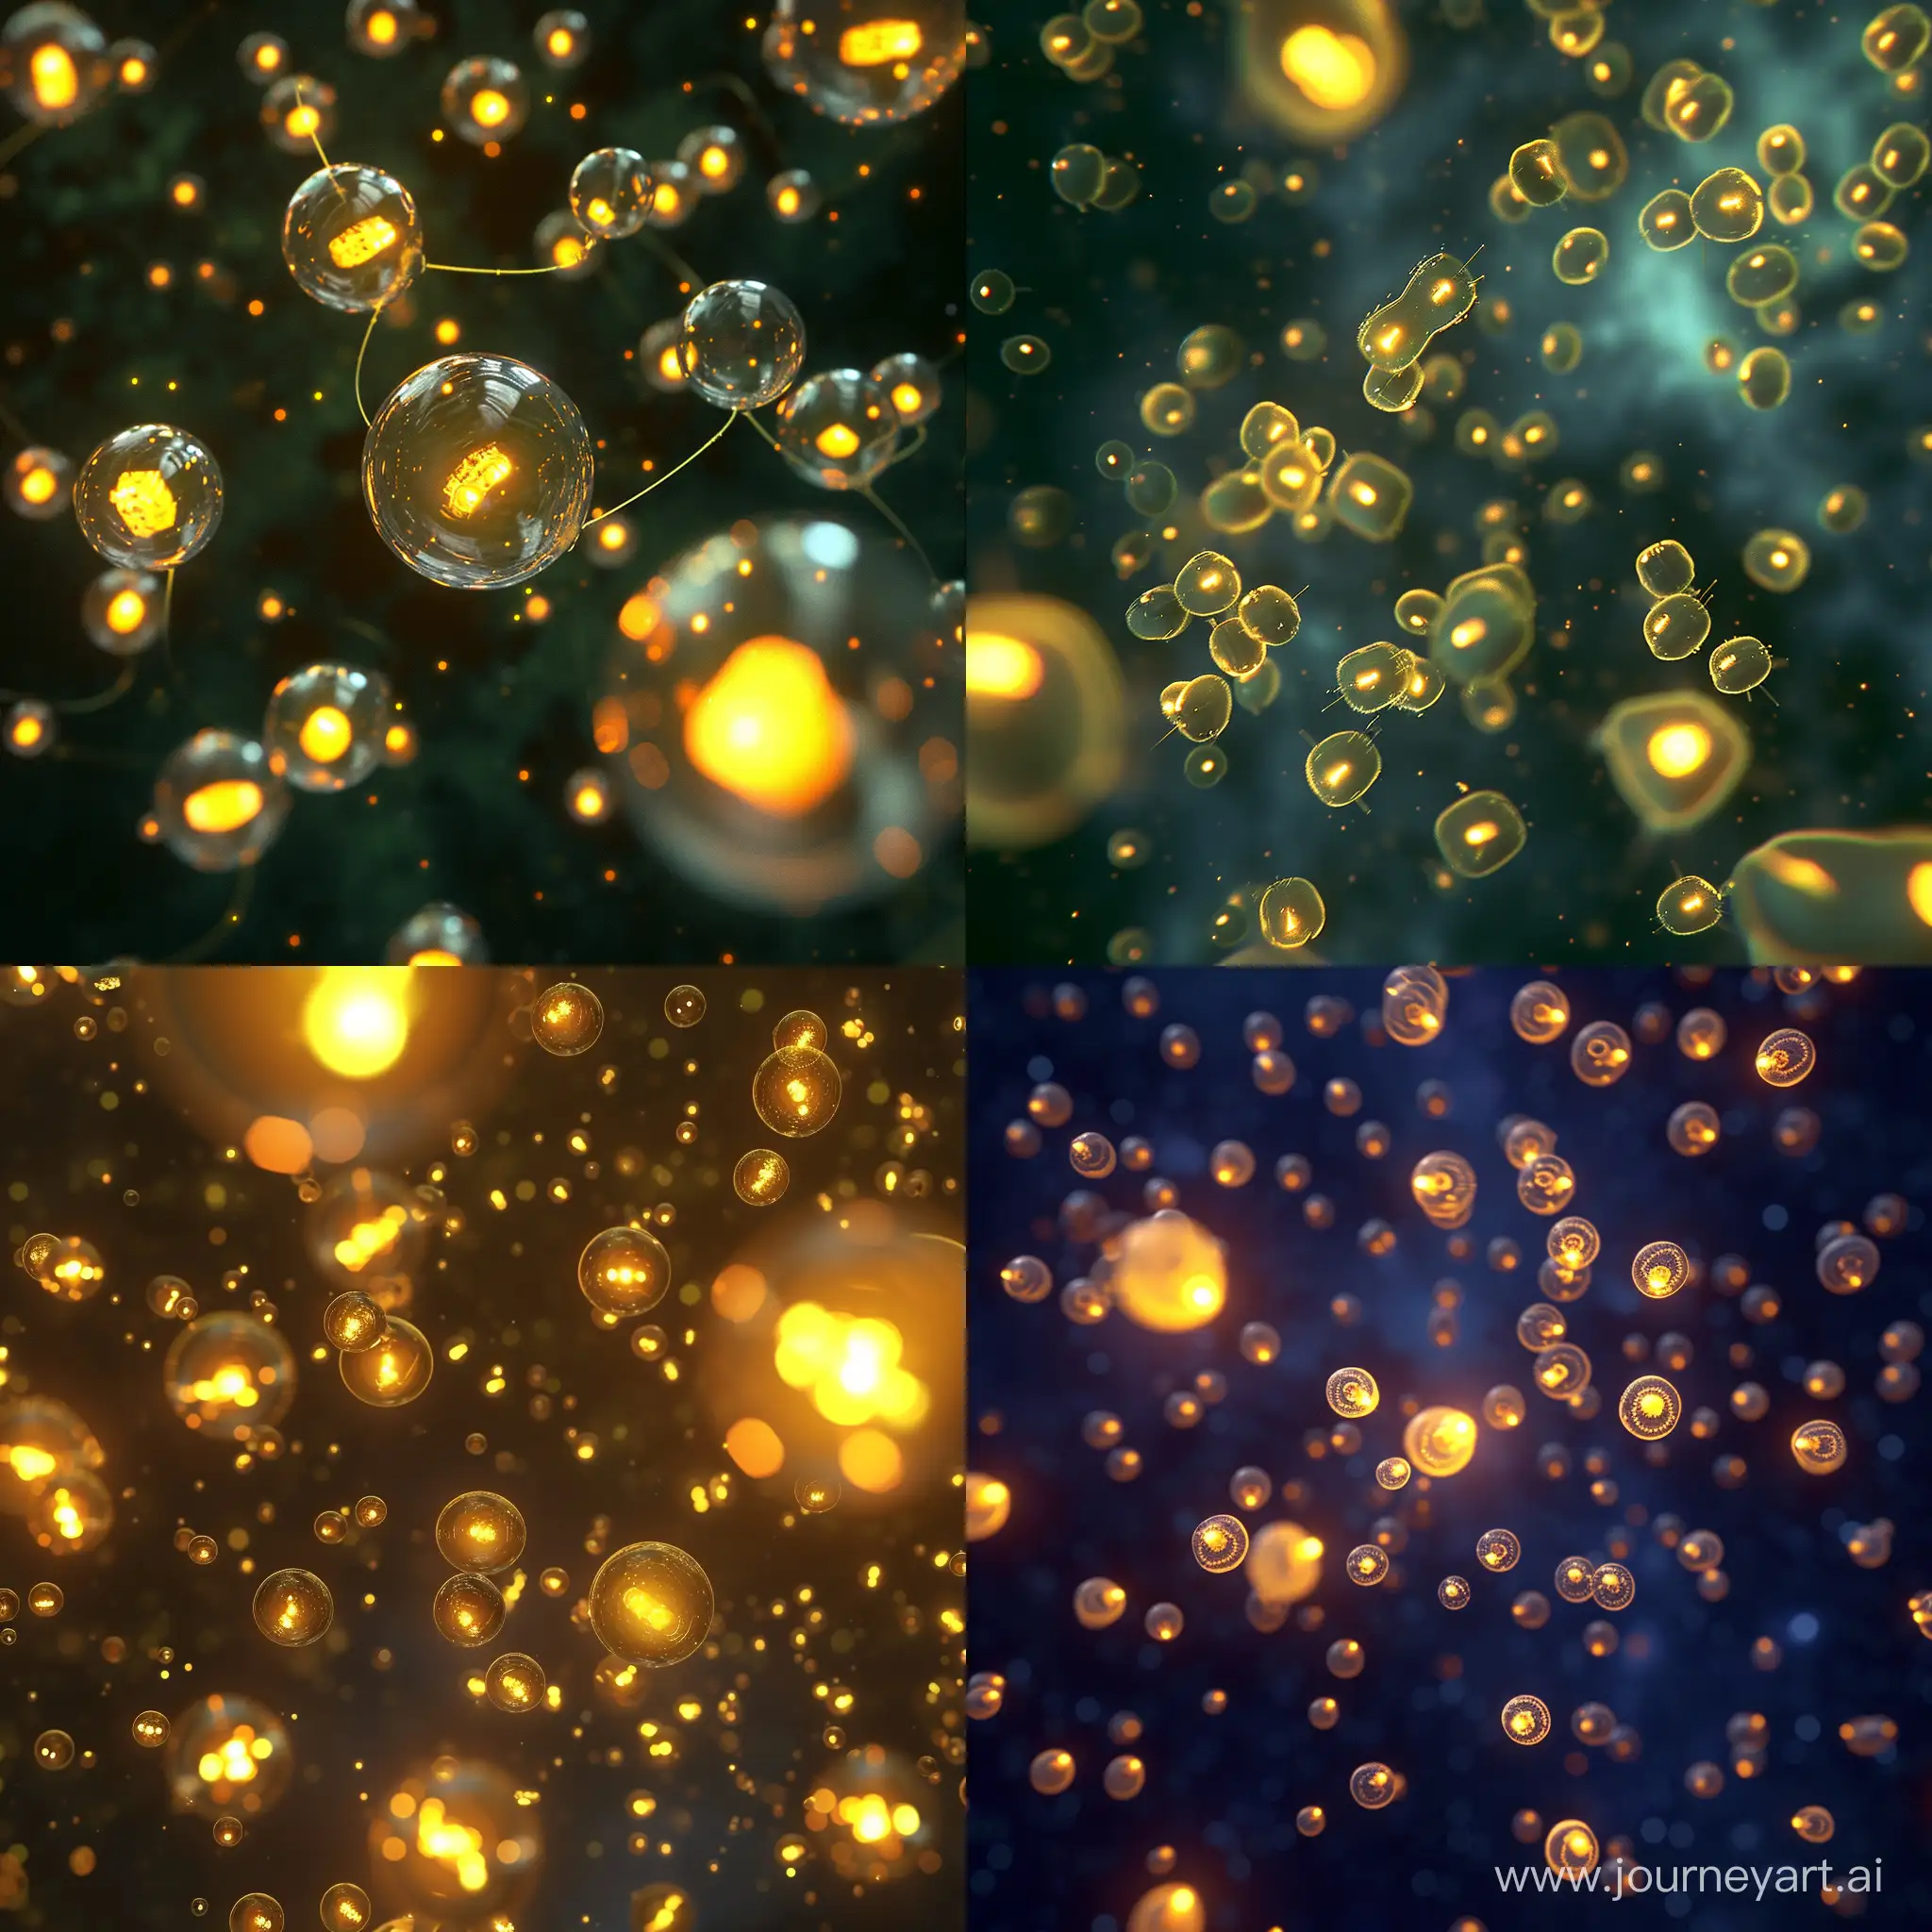 Swarm of small round spaceship, glowing yellow, in space, nanomachine, glow worm